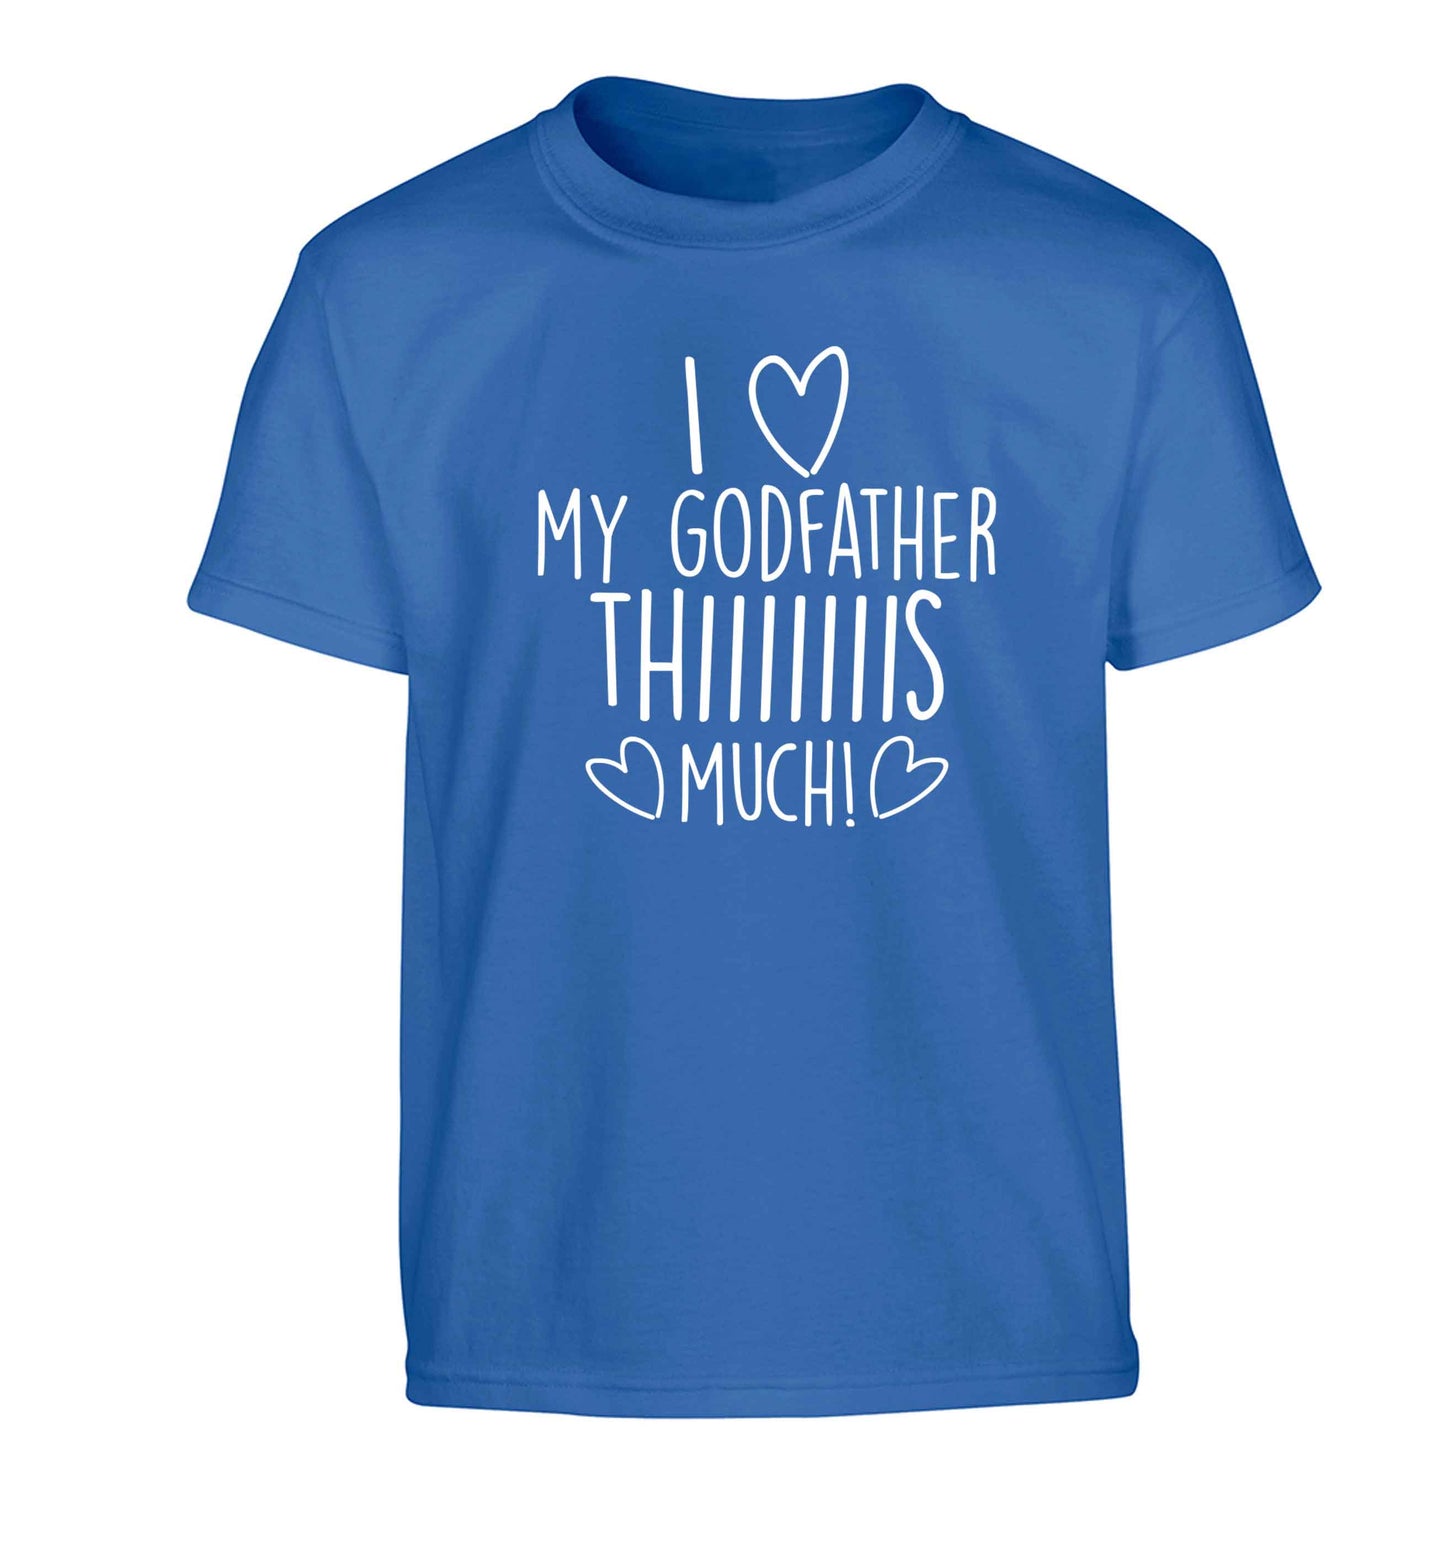 I love my Godfather this much Children's blue Tshirt 12-13 Years